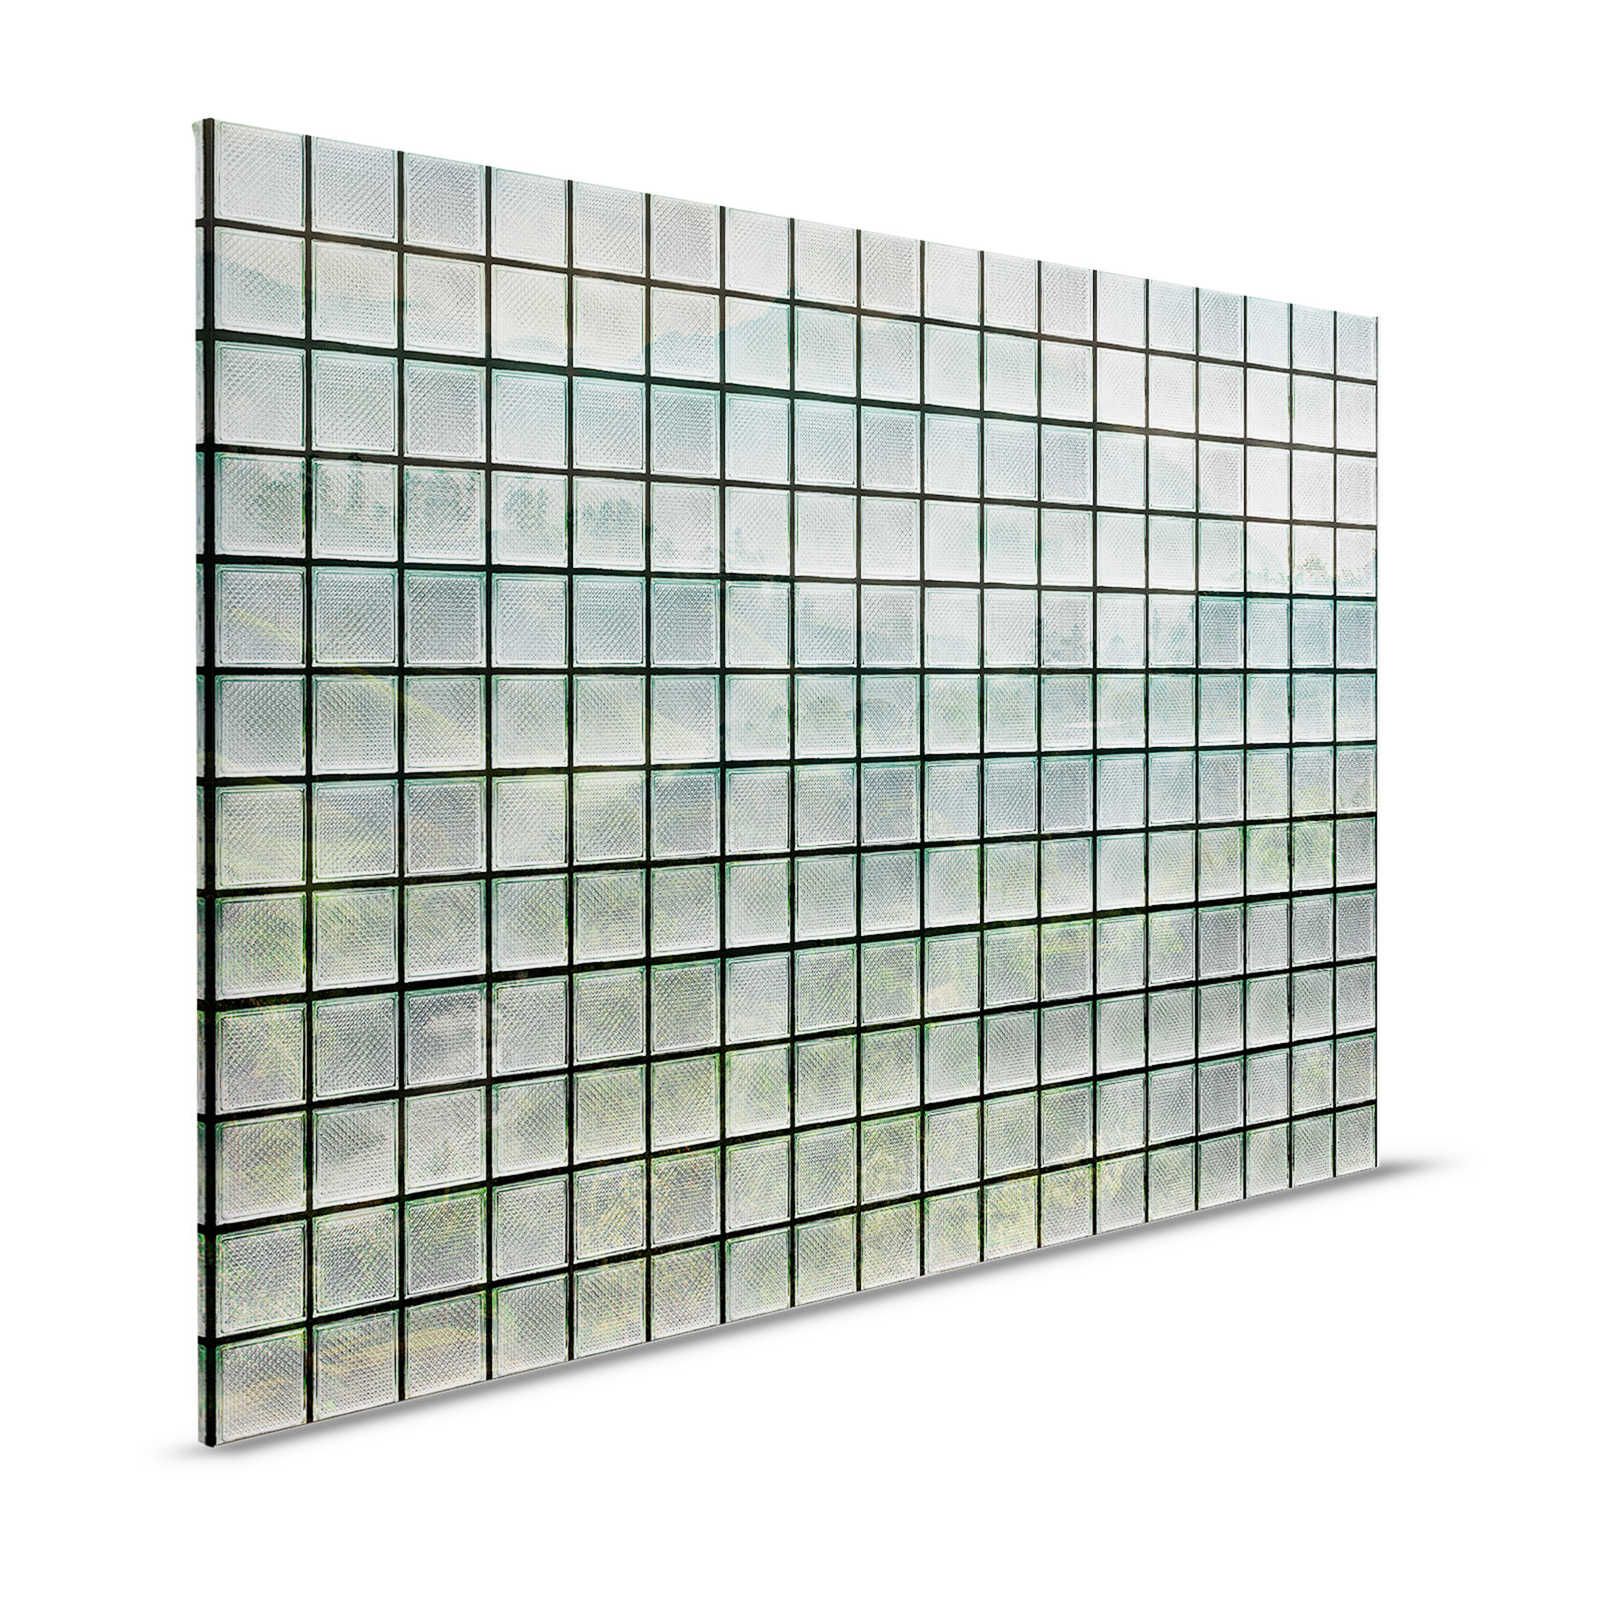 Green House 3 - Lienzo Ventana Pintura Bloques de Vidrio y Bosque Tropical - 1,20 m x 0,80 m
